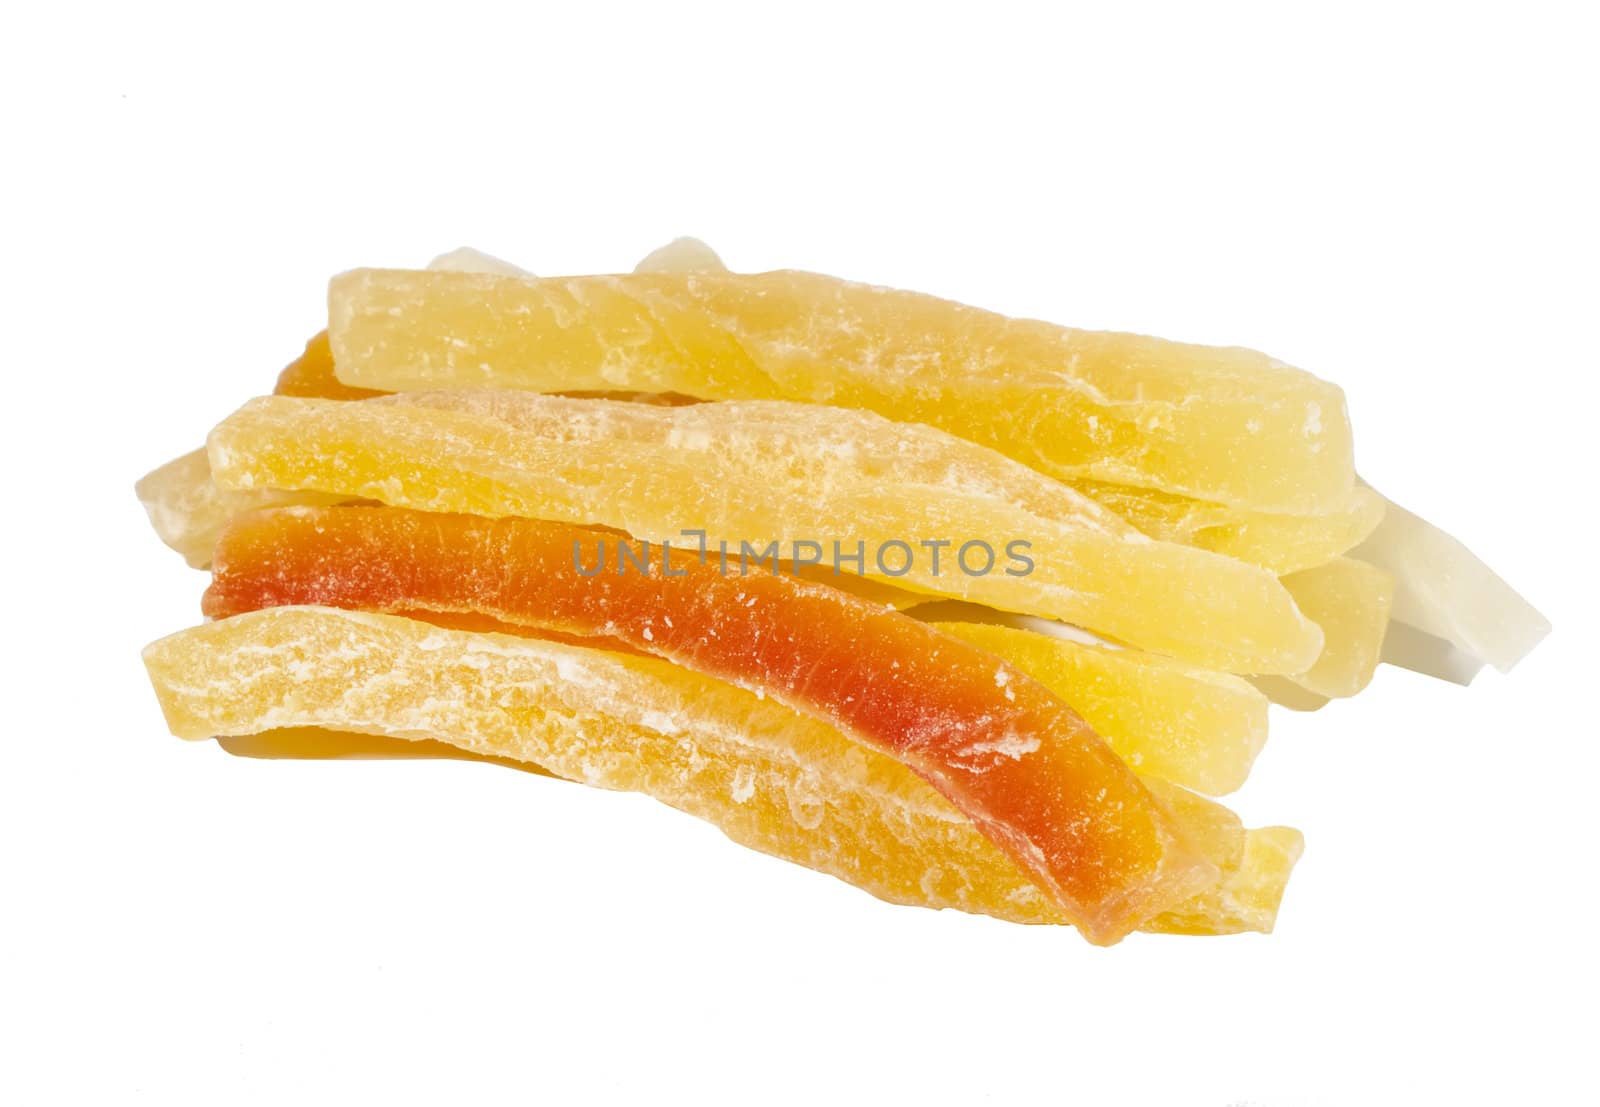 Dried sweet orange and yellow papaya bars